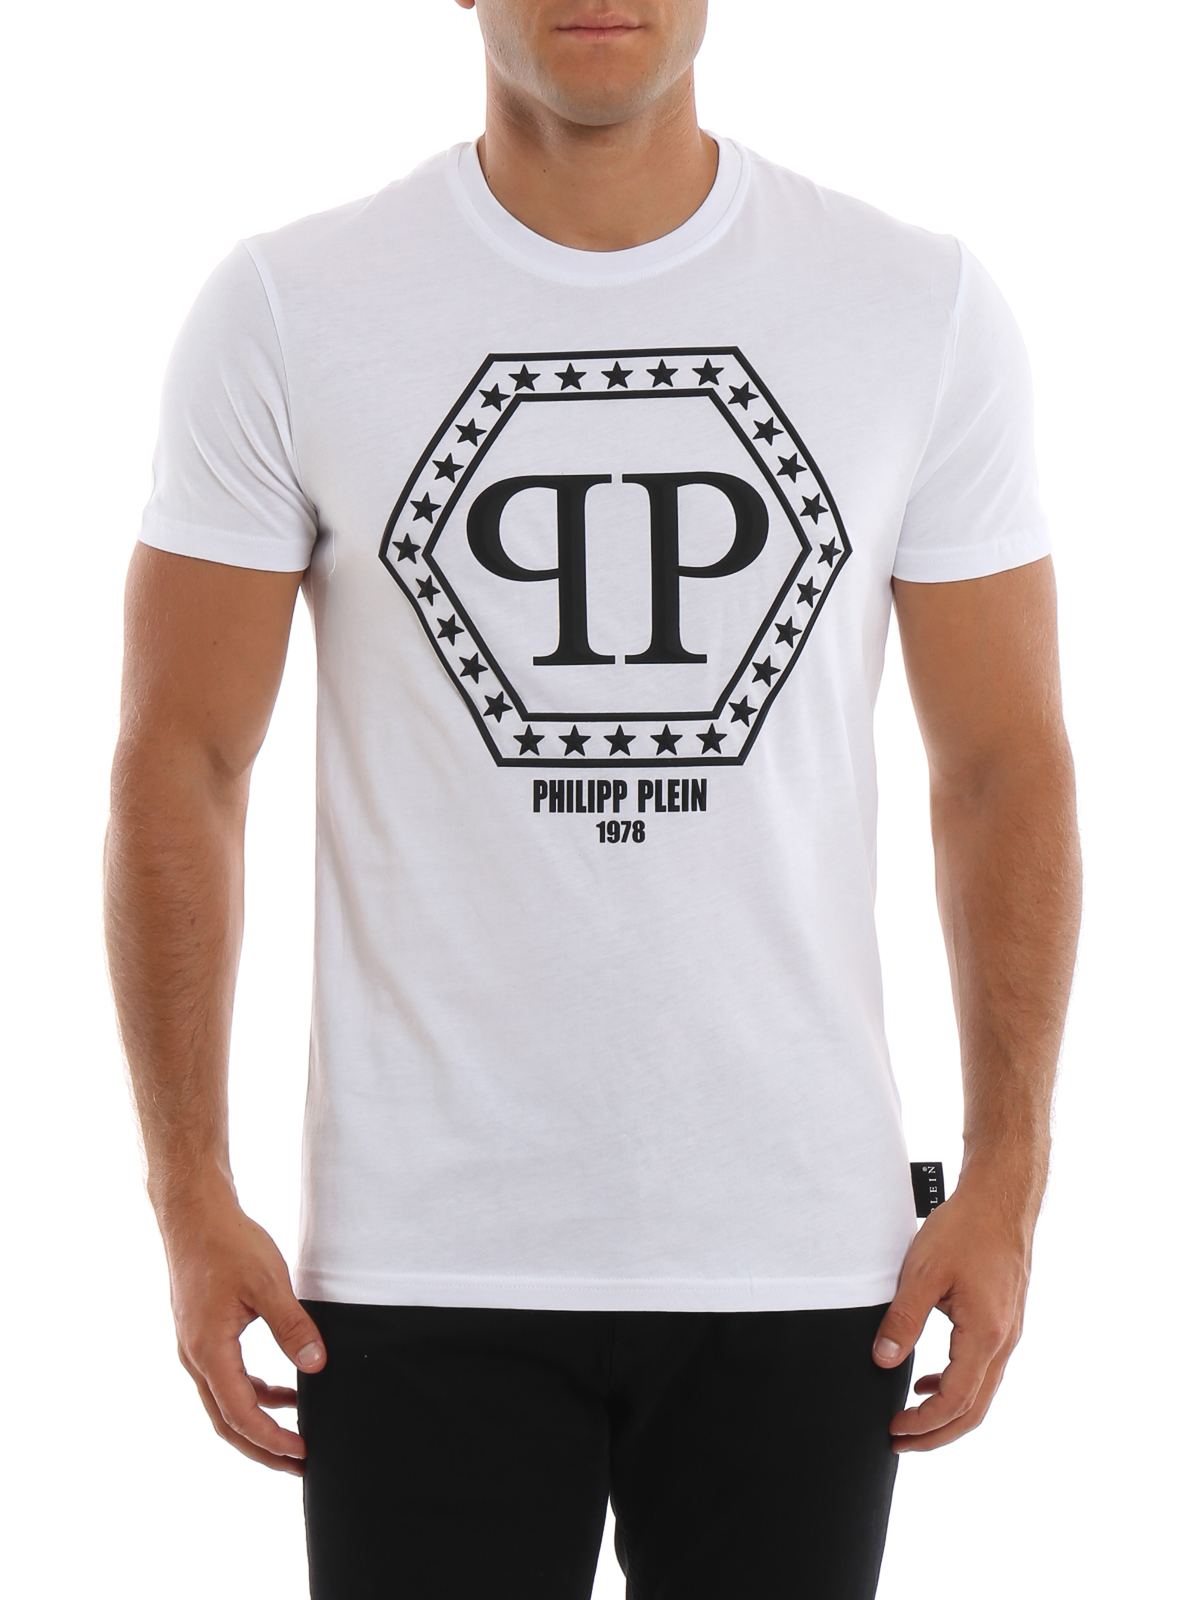 Camisetas Philipp Plein Great Offers, 40% | jlcatj.gob.mx